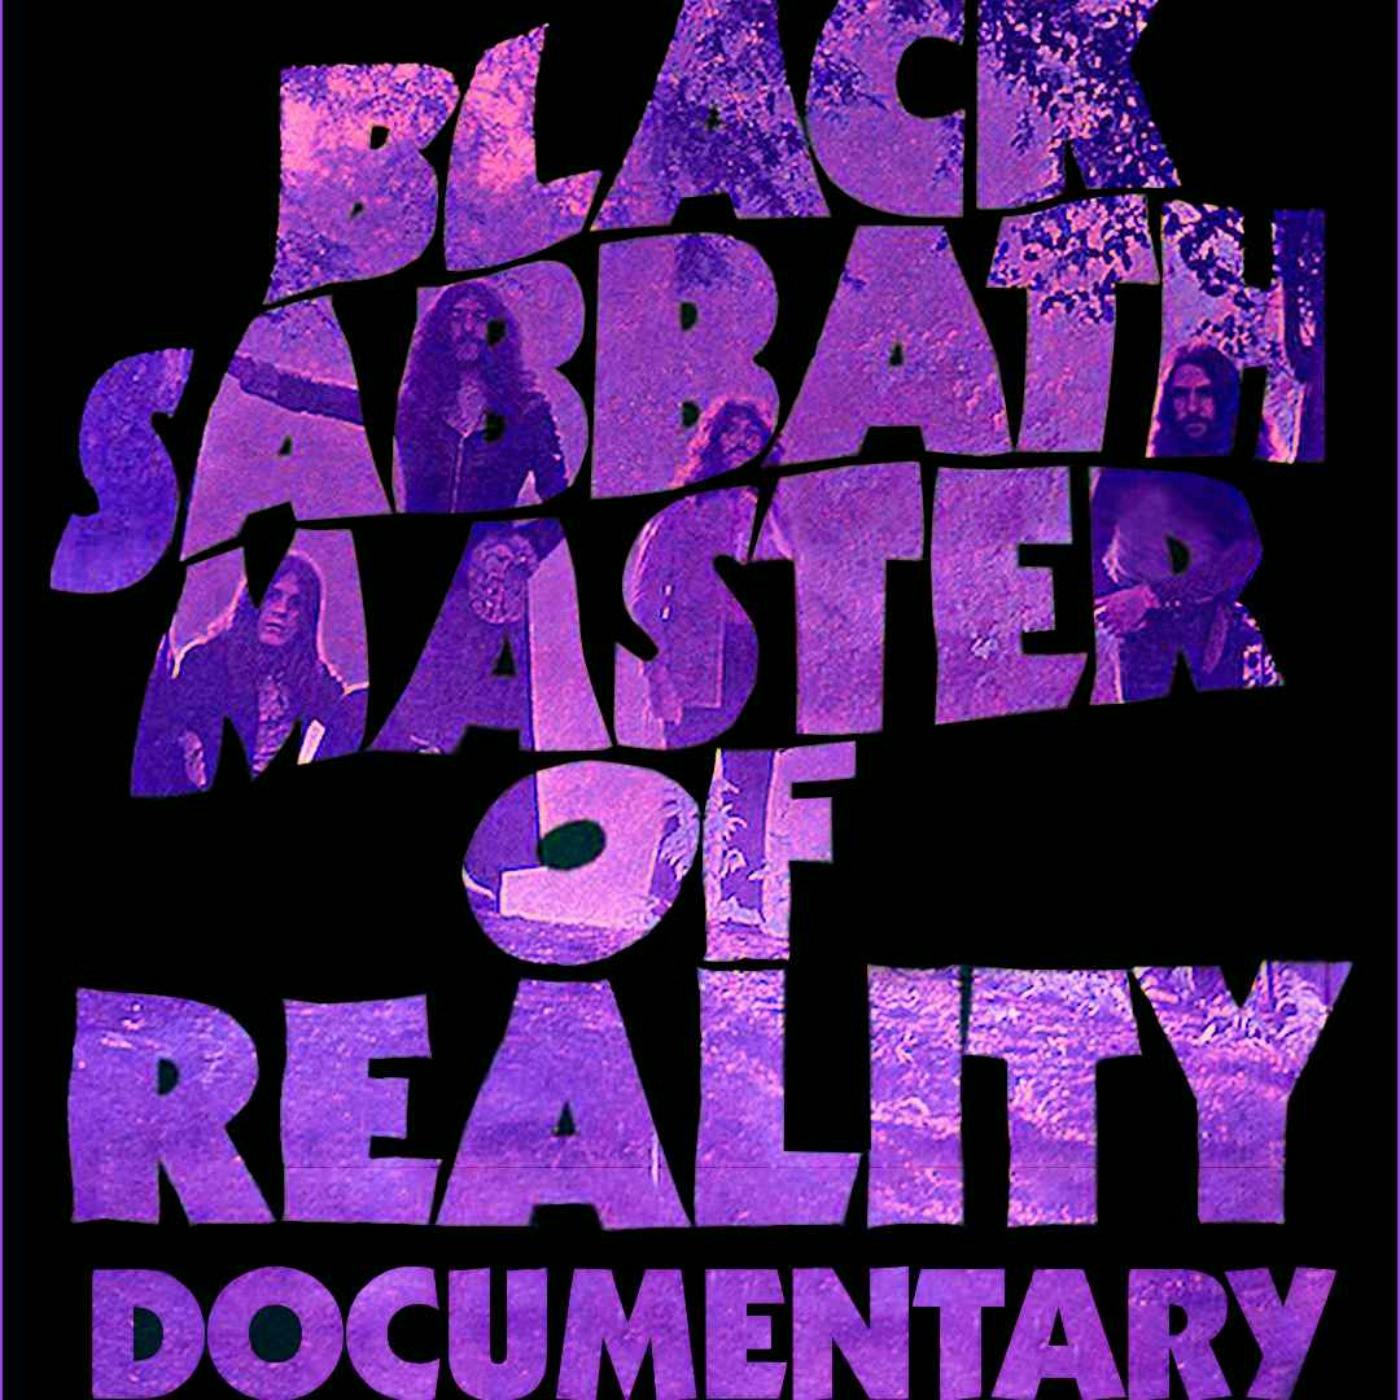 Black Sabbath - Master of Reality | The audio documentary